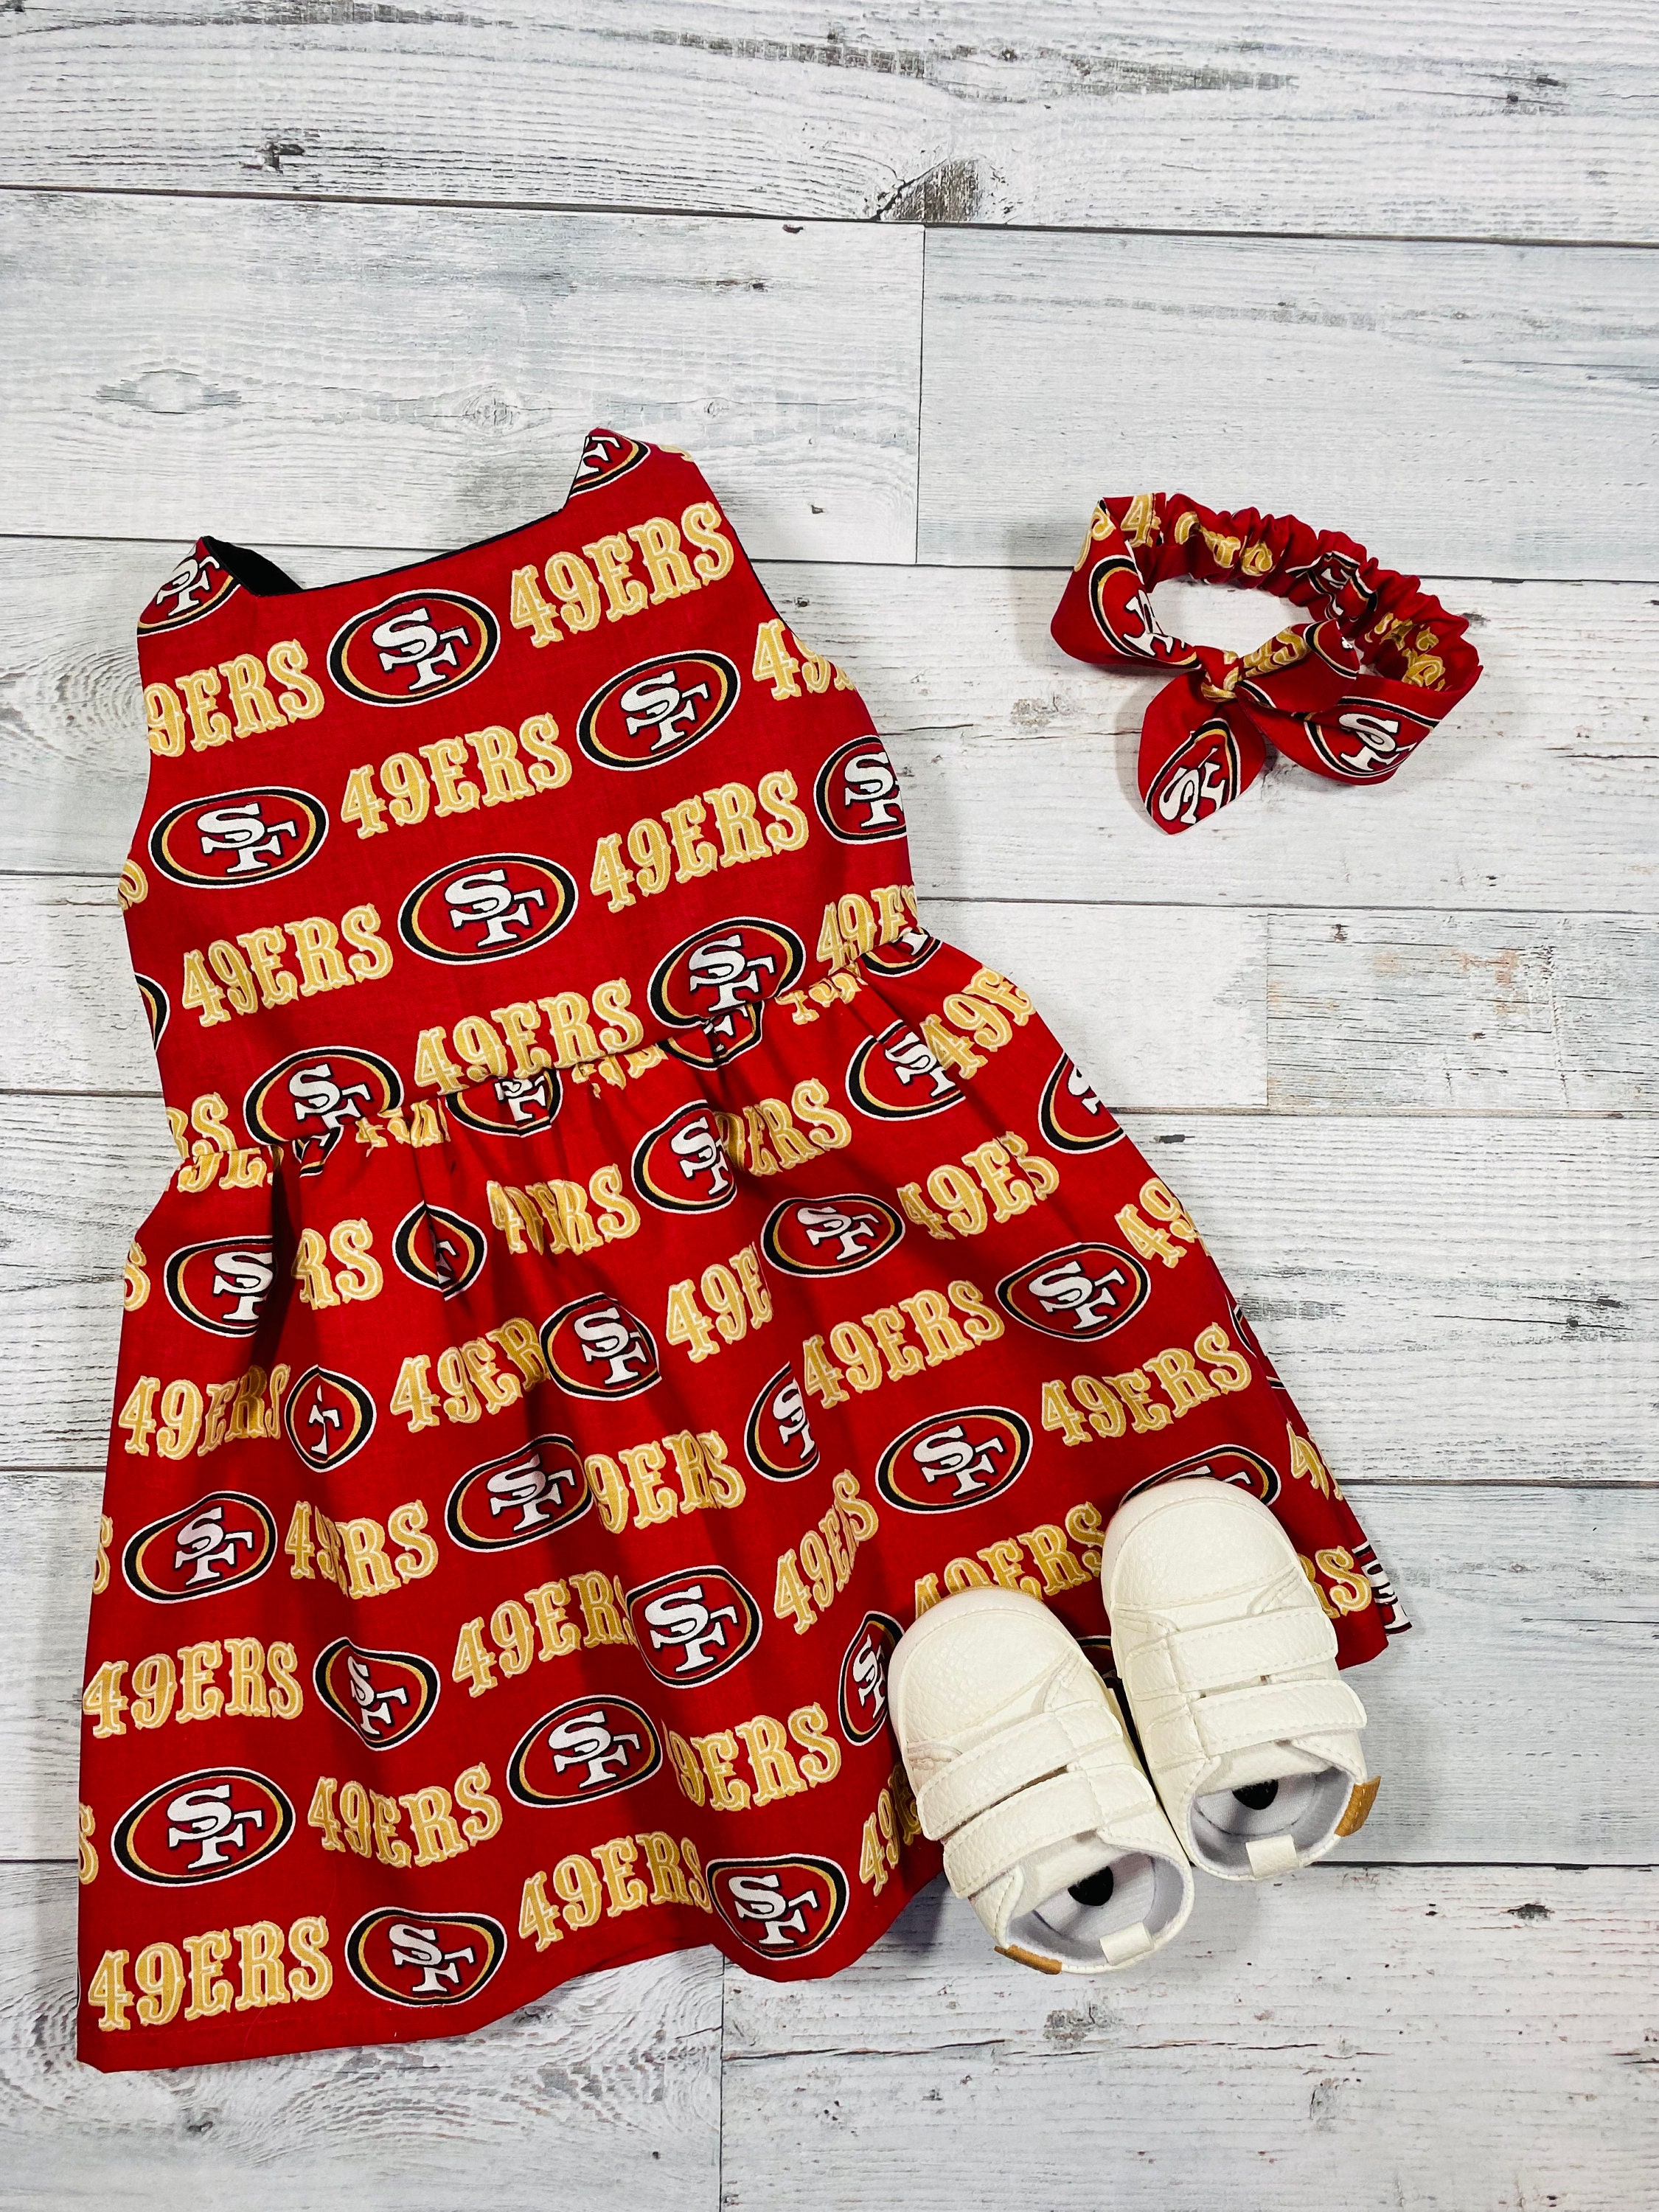 San Francisco 49ers Women Slip Dress Sleeveless Loose Beach Sundress